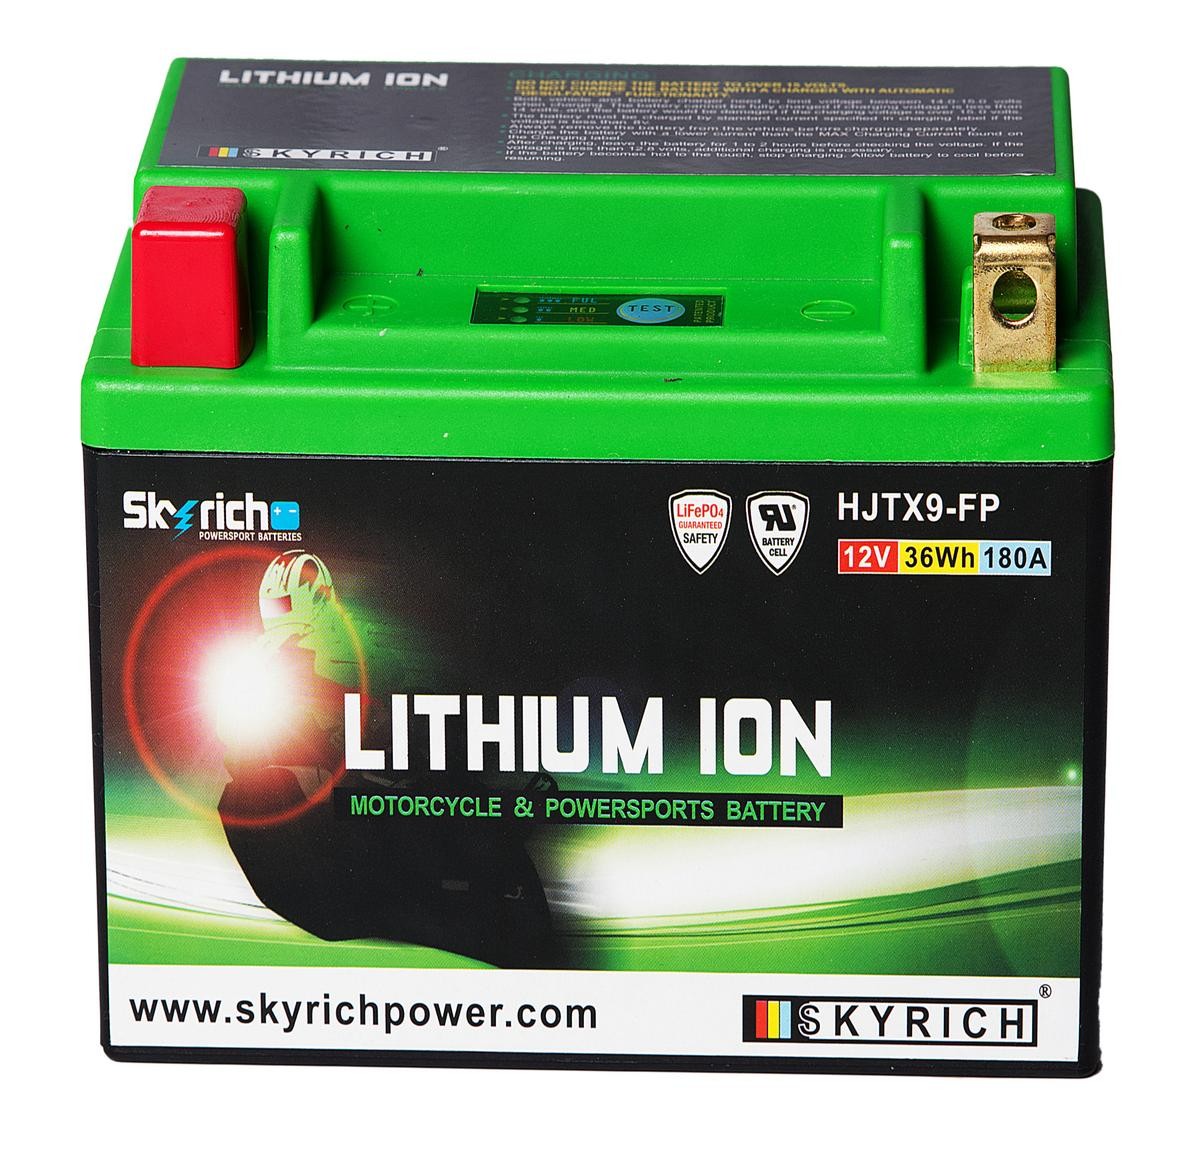 SKYRICH LITHIUM ION Batterie 12V 3Ah 180A N Li-Ionen-Batterie HJTX9-FP YAMAHA Mofa Maxi-Scooter